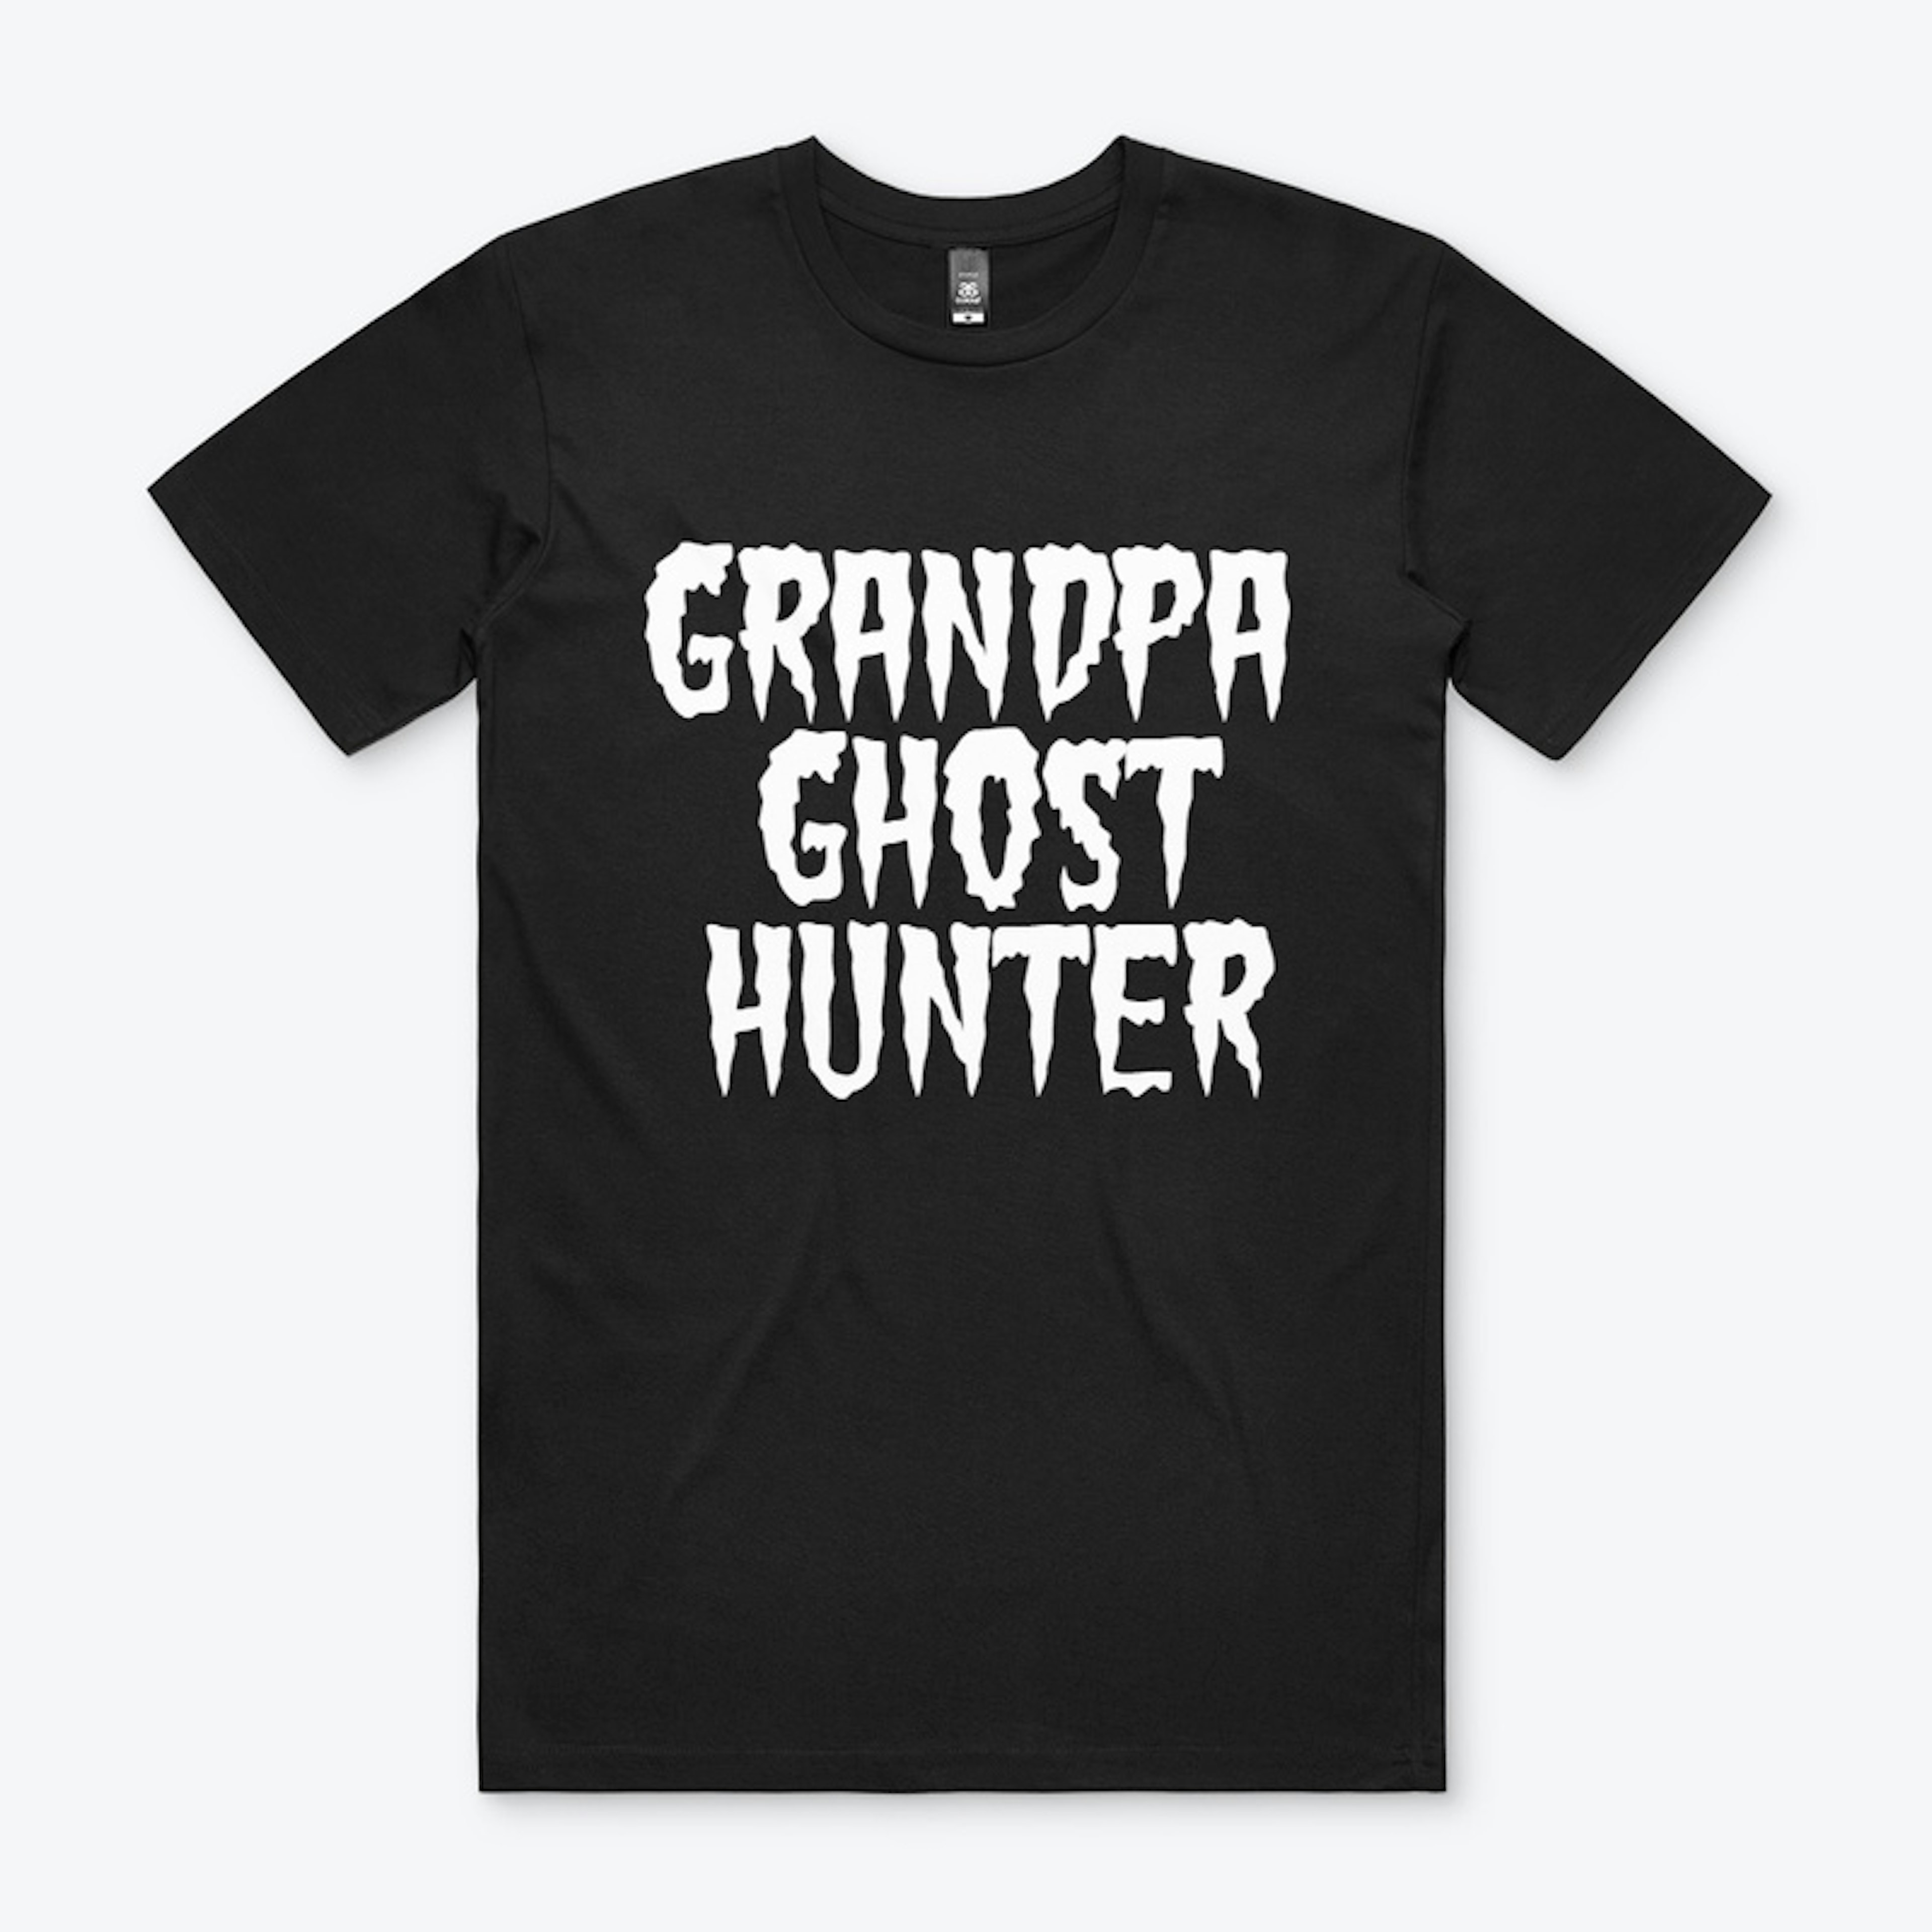 Grandpa Ghost Hunter Tee dark